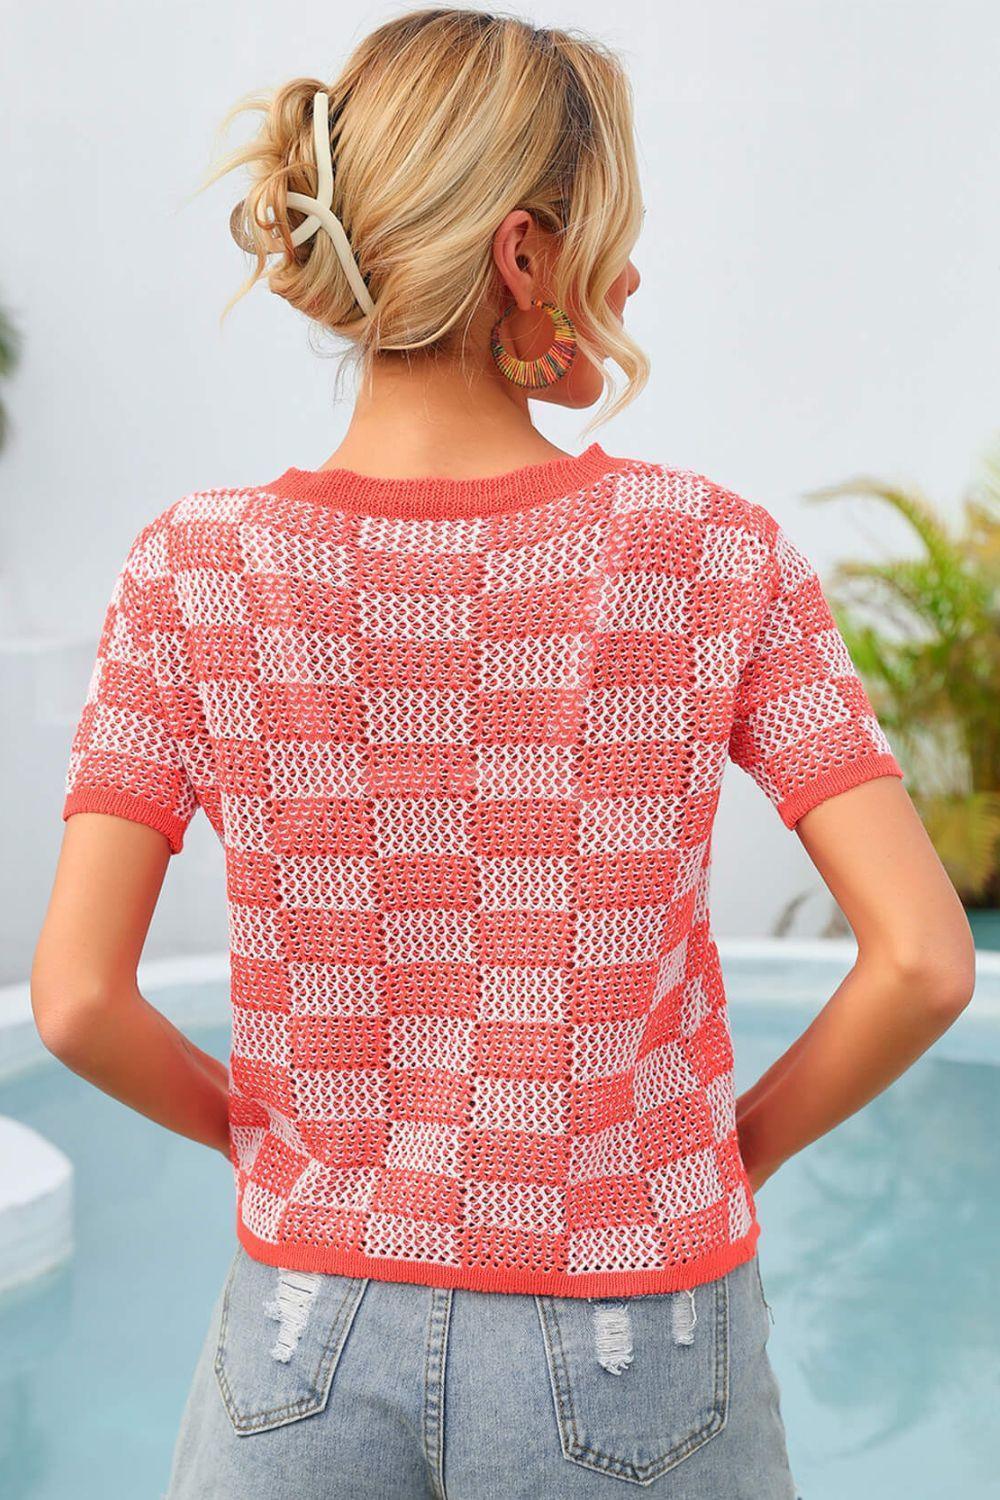 Cheer Up Checkered Knit T-Shirt - MXSTUDIO.COM